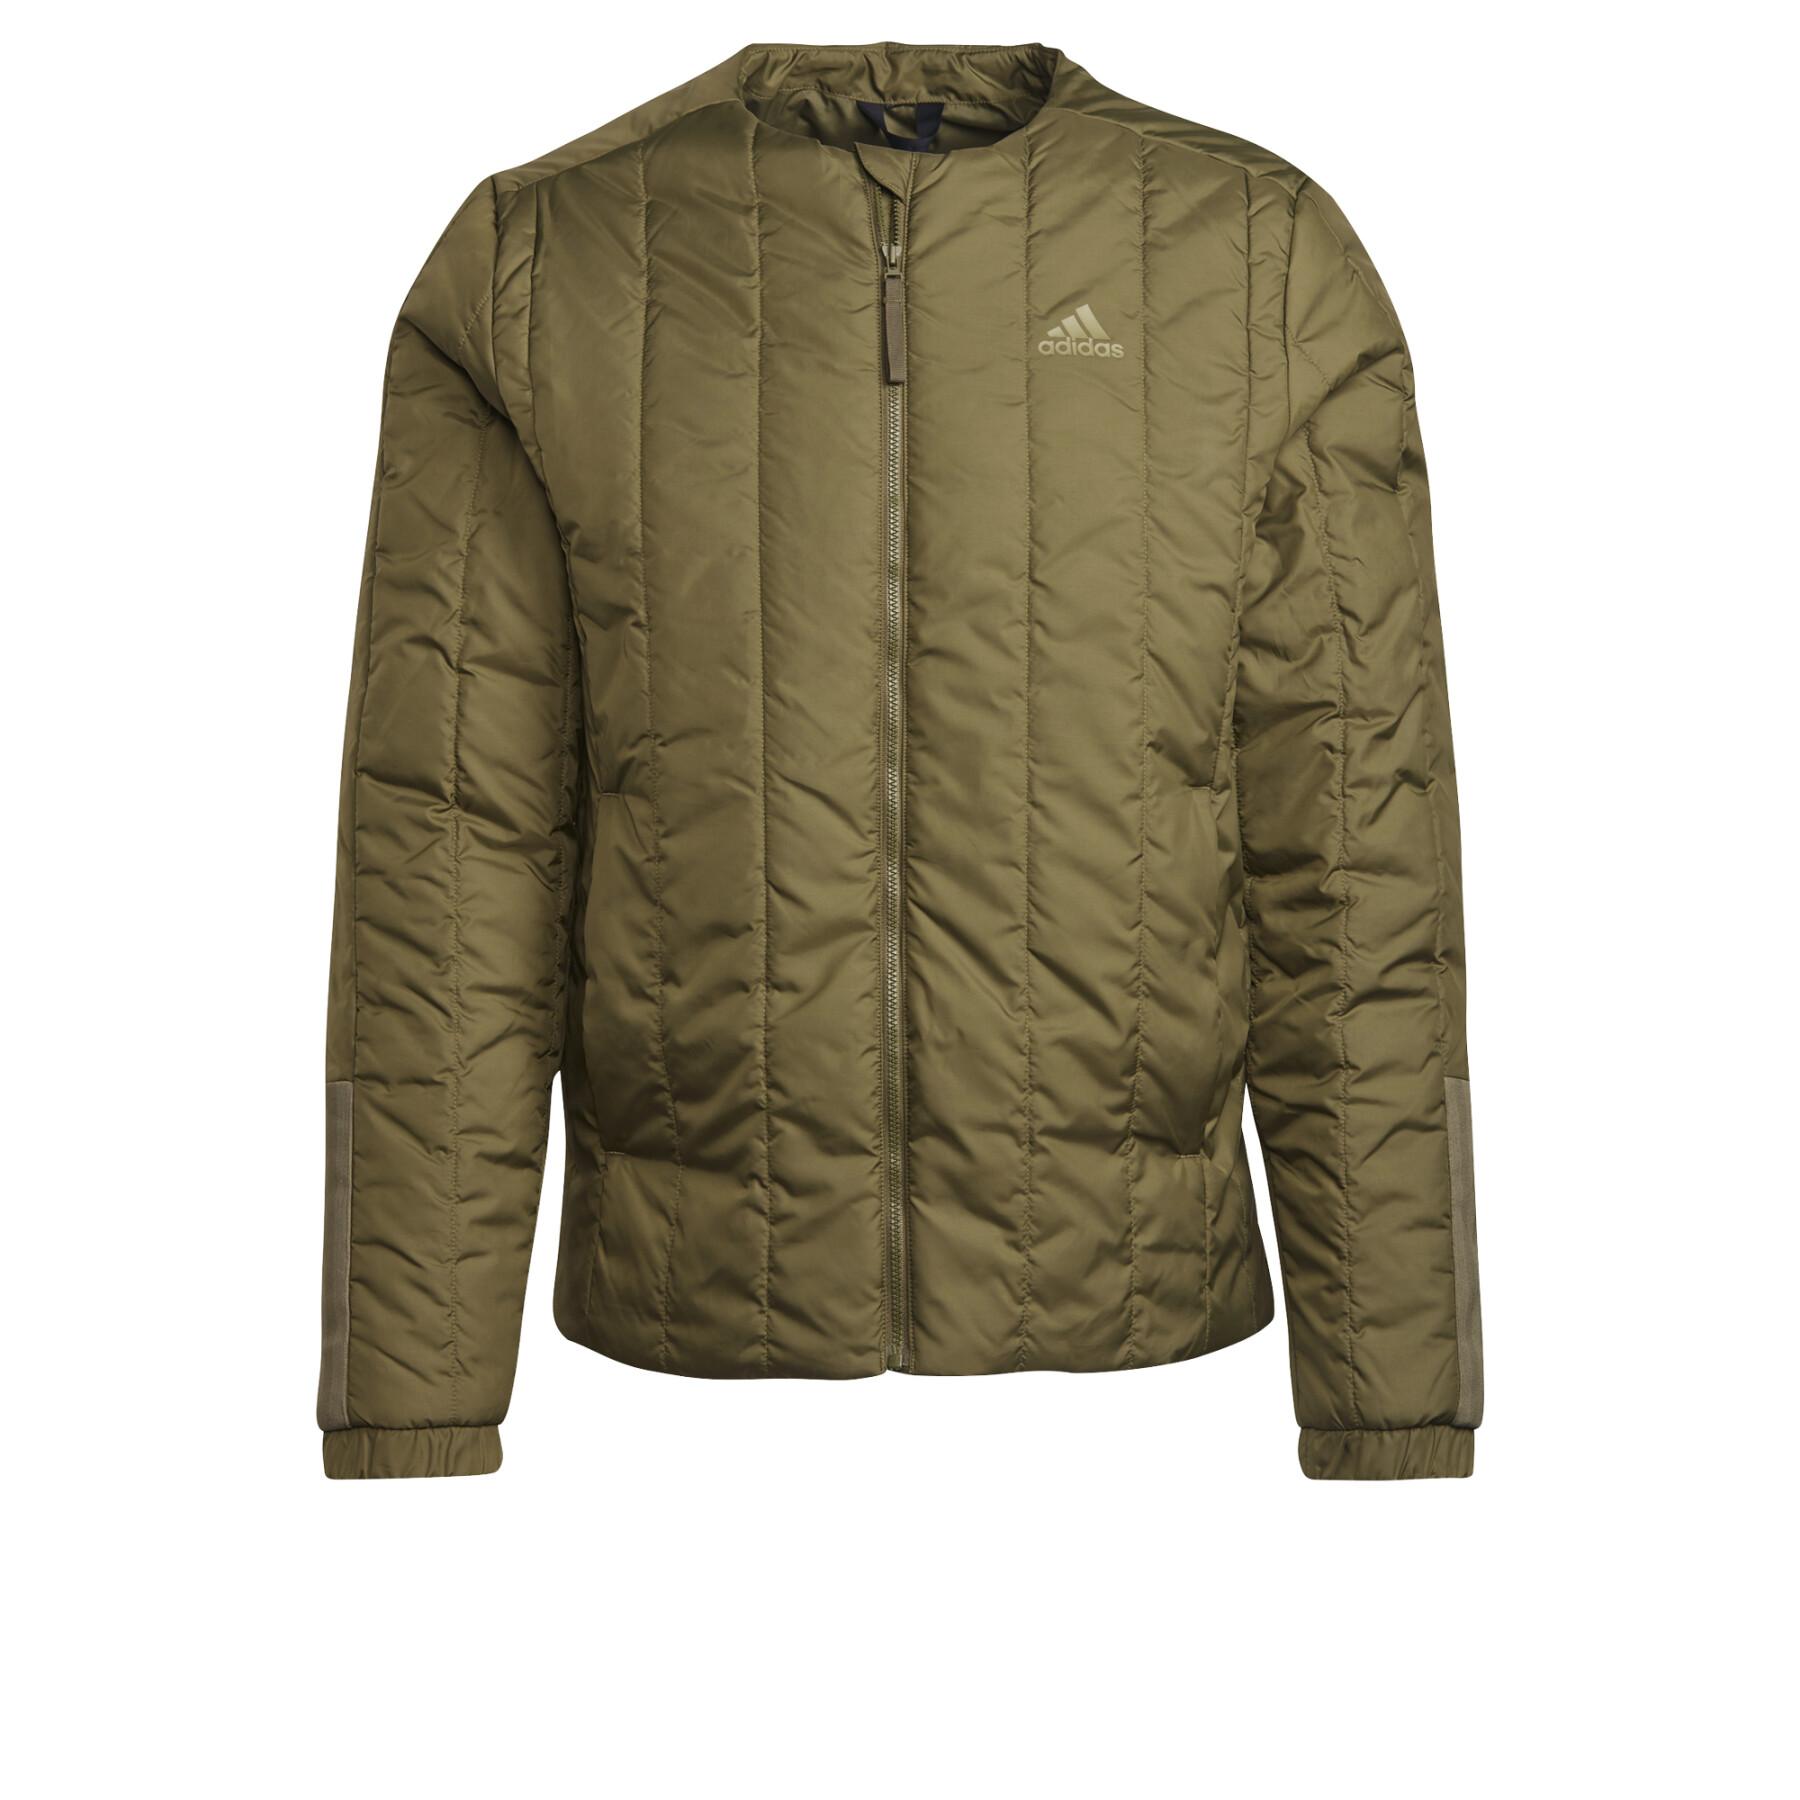 Asociación Impulso Mata Jacket adidas Itavic 3-Stripes Light - Jackets - Men's clothing - Lifestyle